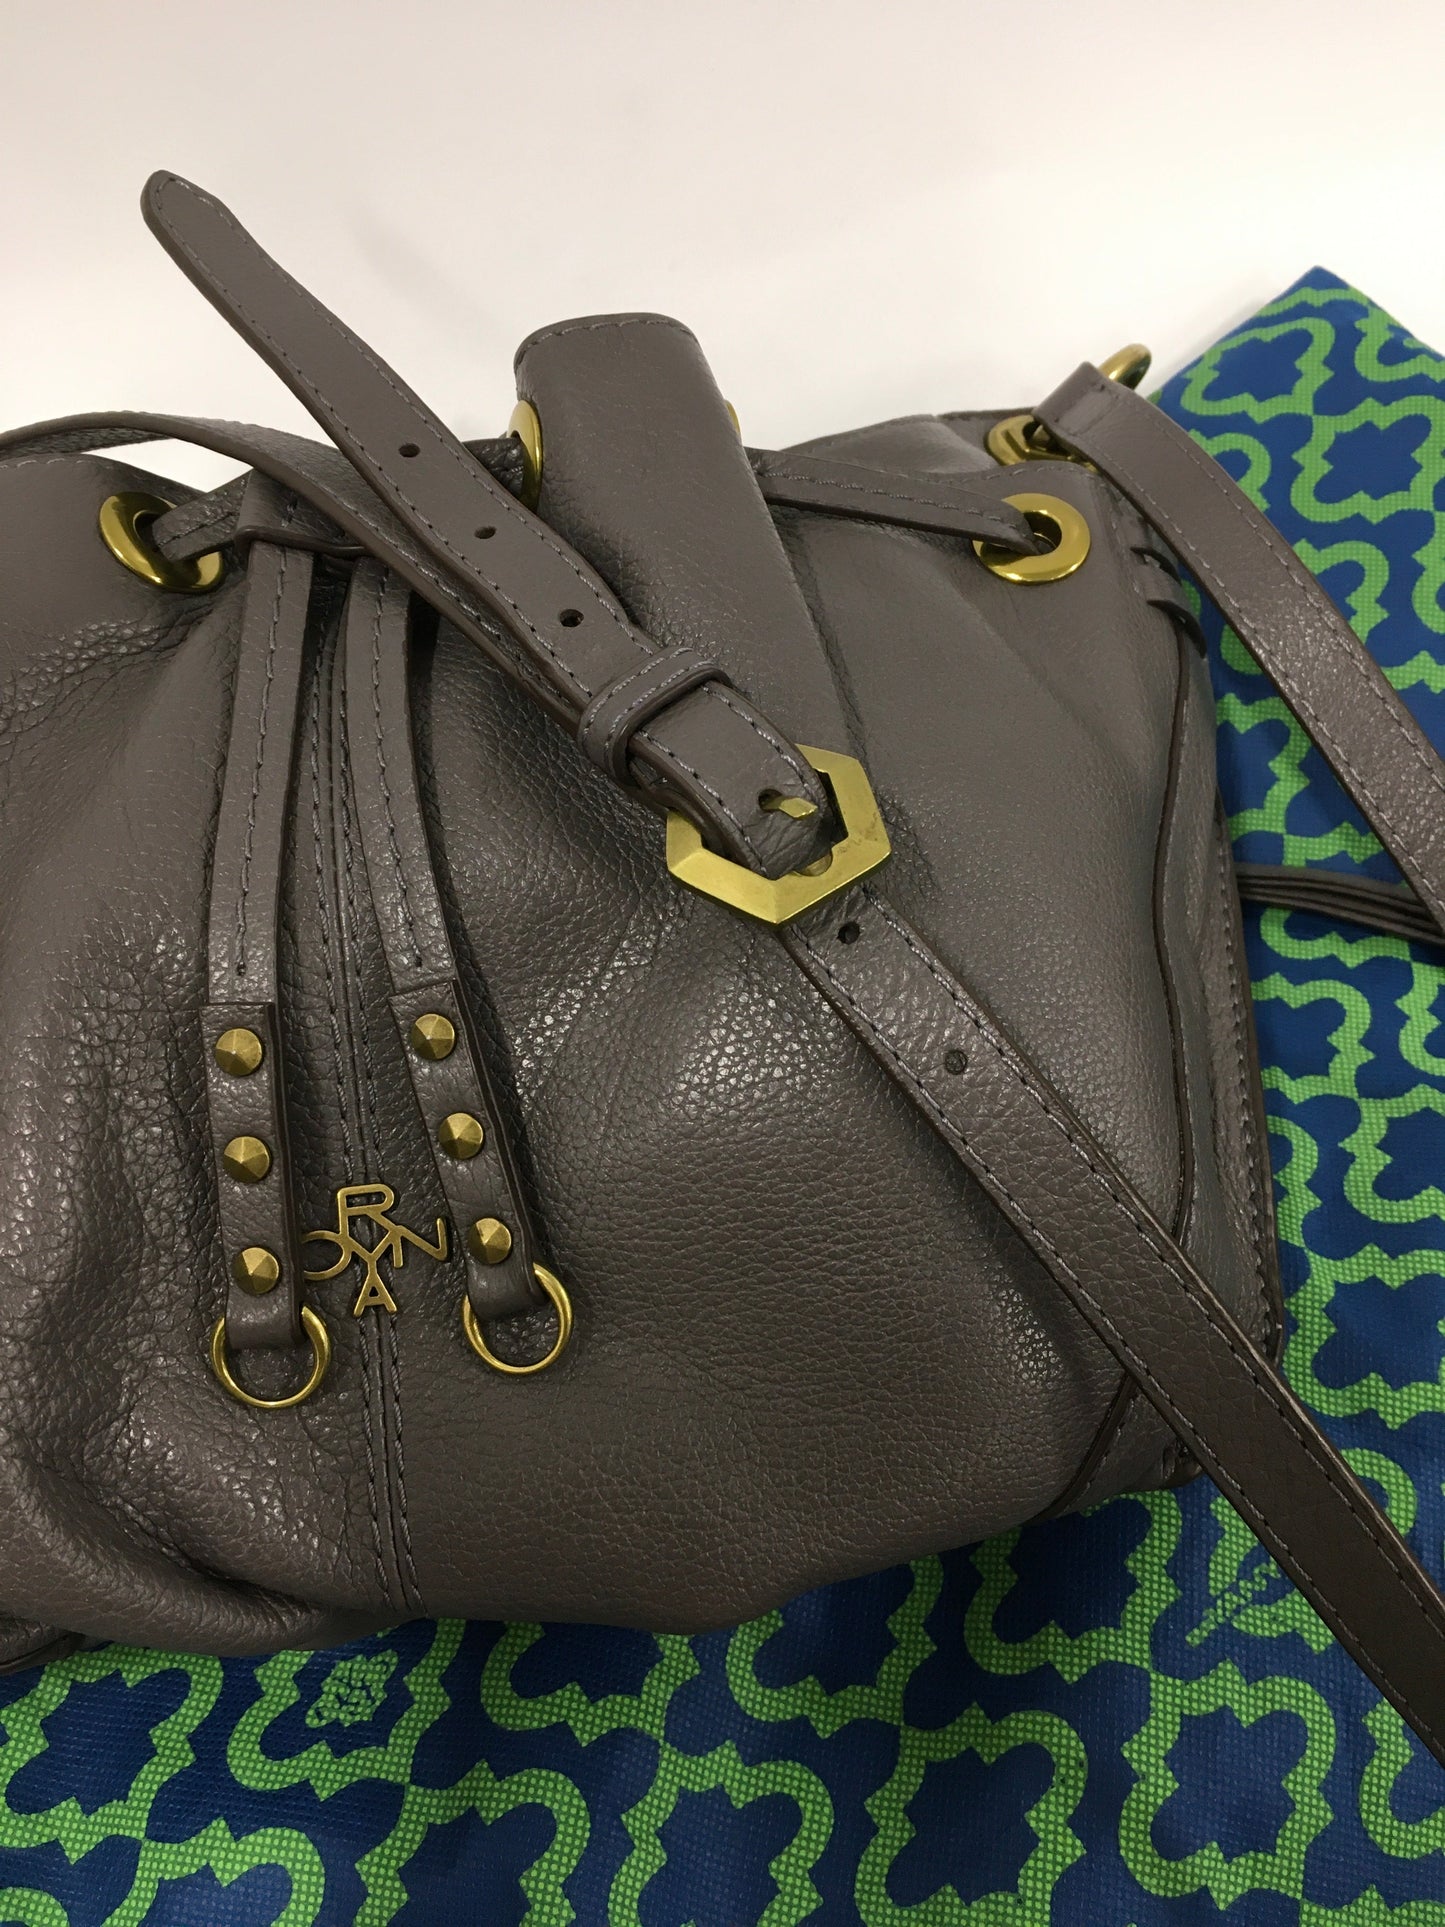 Handbag Designer By Oryany  Size: Medium